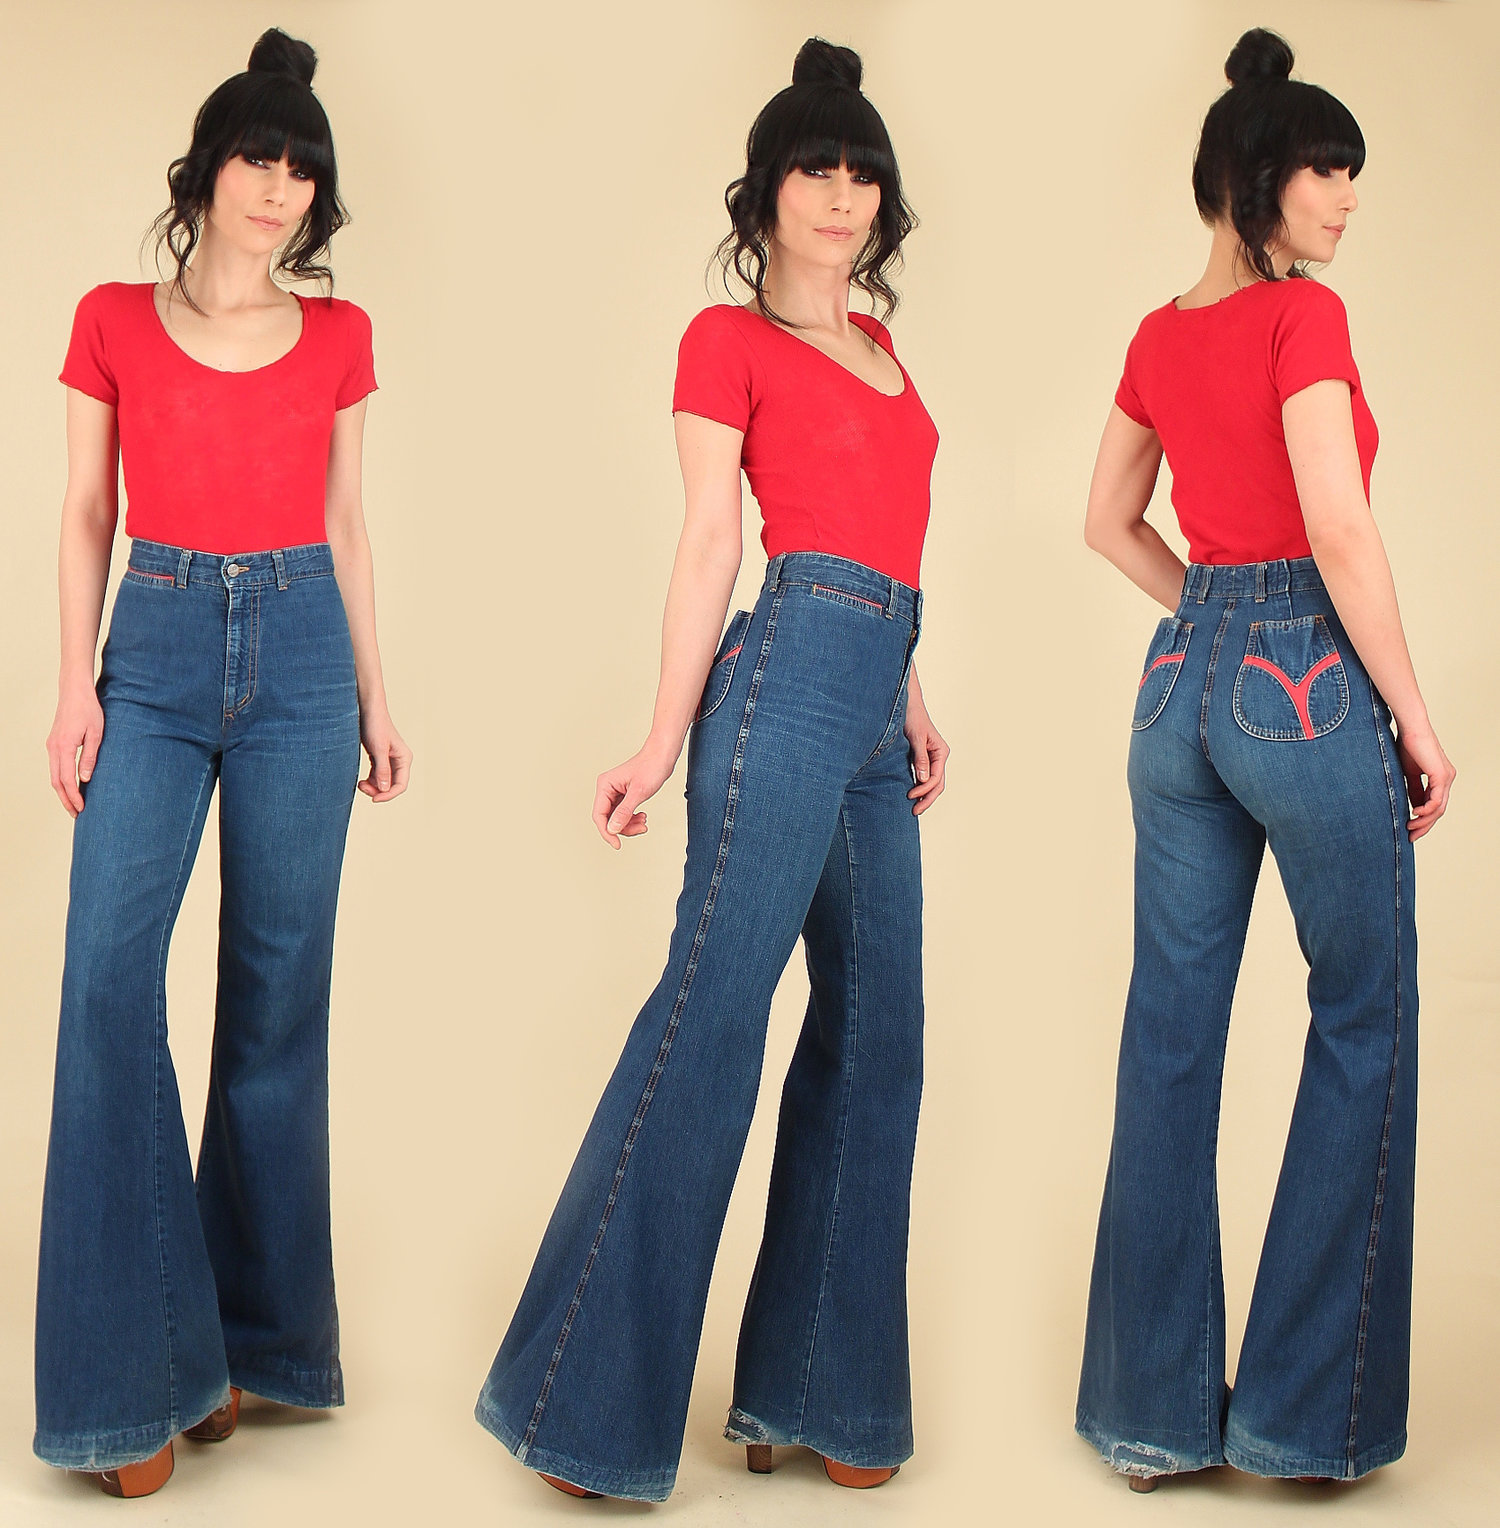 Vintage 70s High Waisted Bell Bottom Jeans // by Chemin de Fer